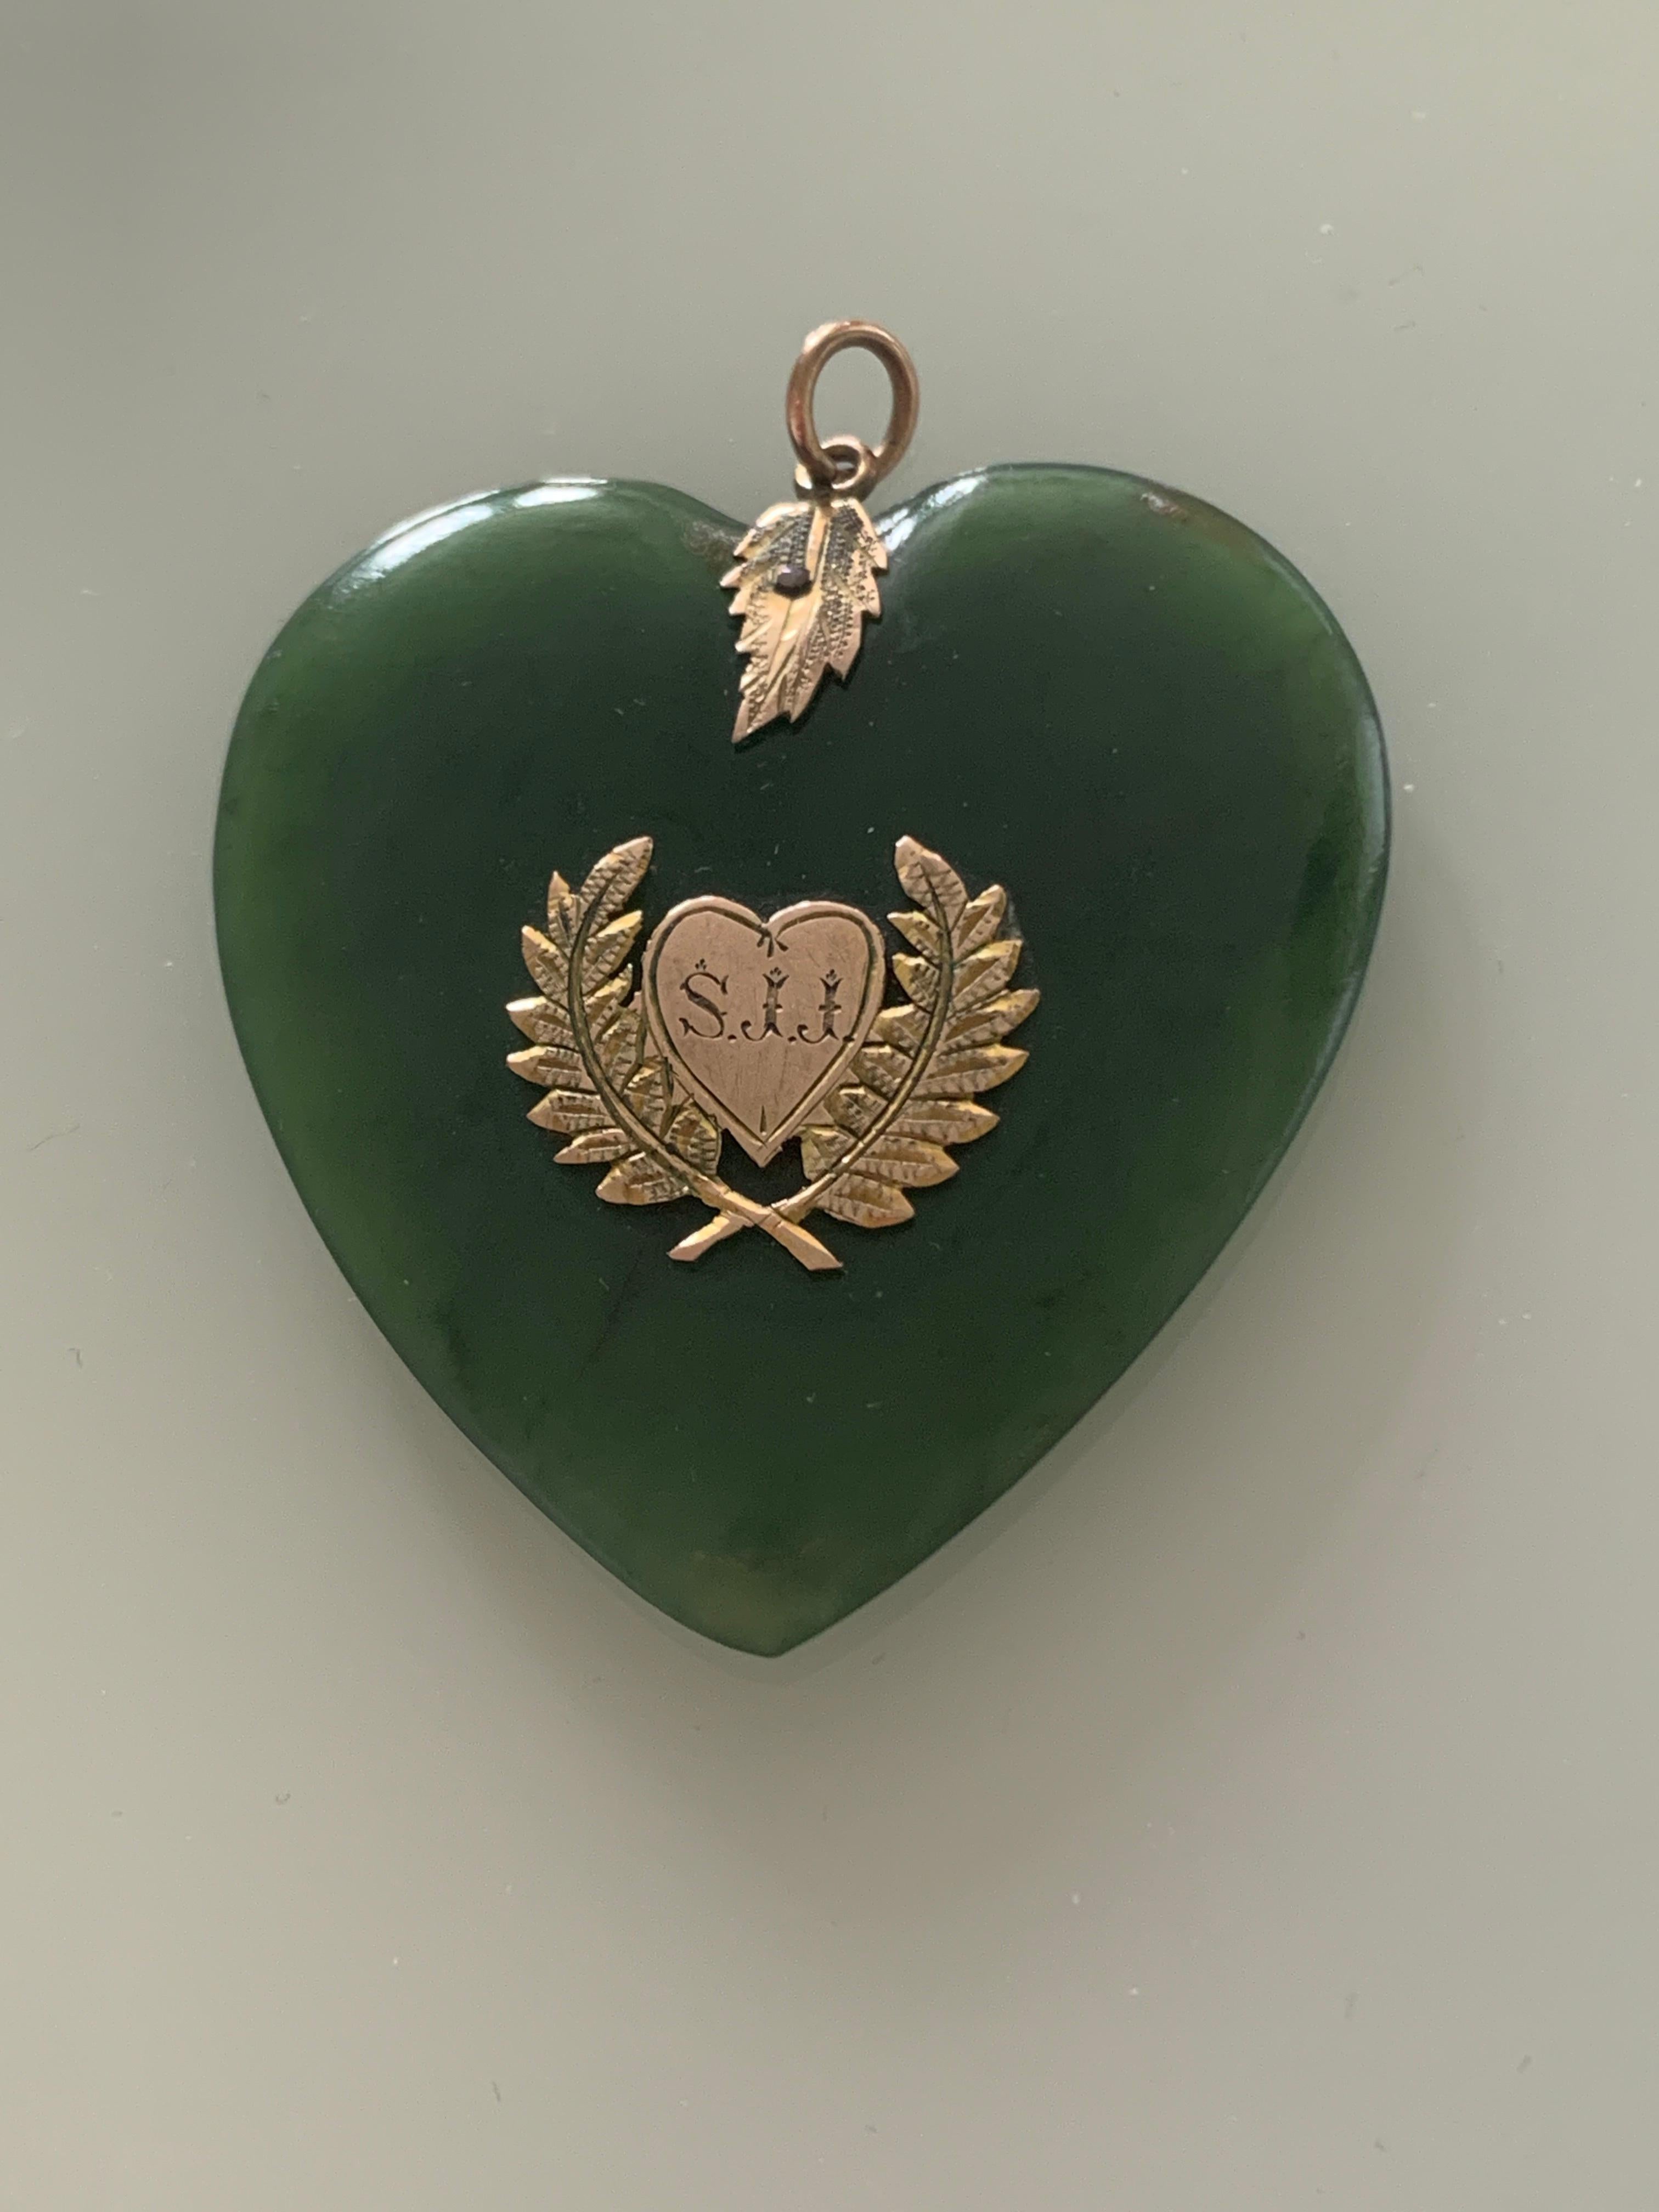 Huge Stunning Antique
Jade Stone Heart with 9ct Gold Decoration & Bail
Circa 1880s
Victorian Era
Size 4.5 cm x 5 cm 
Weight 18 grammes